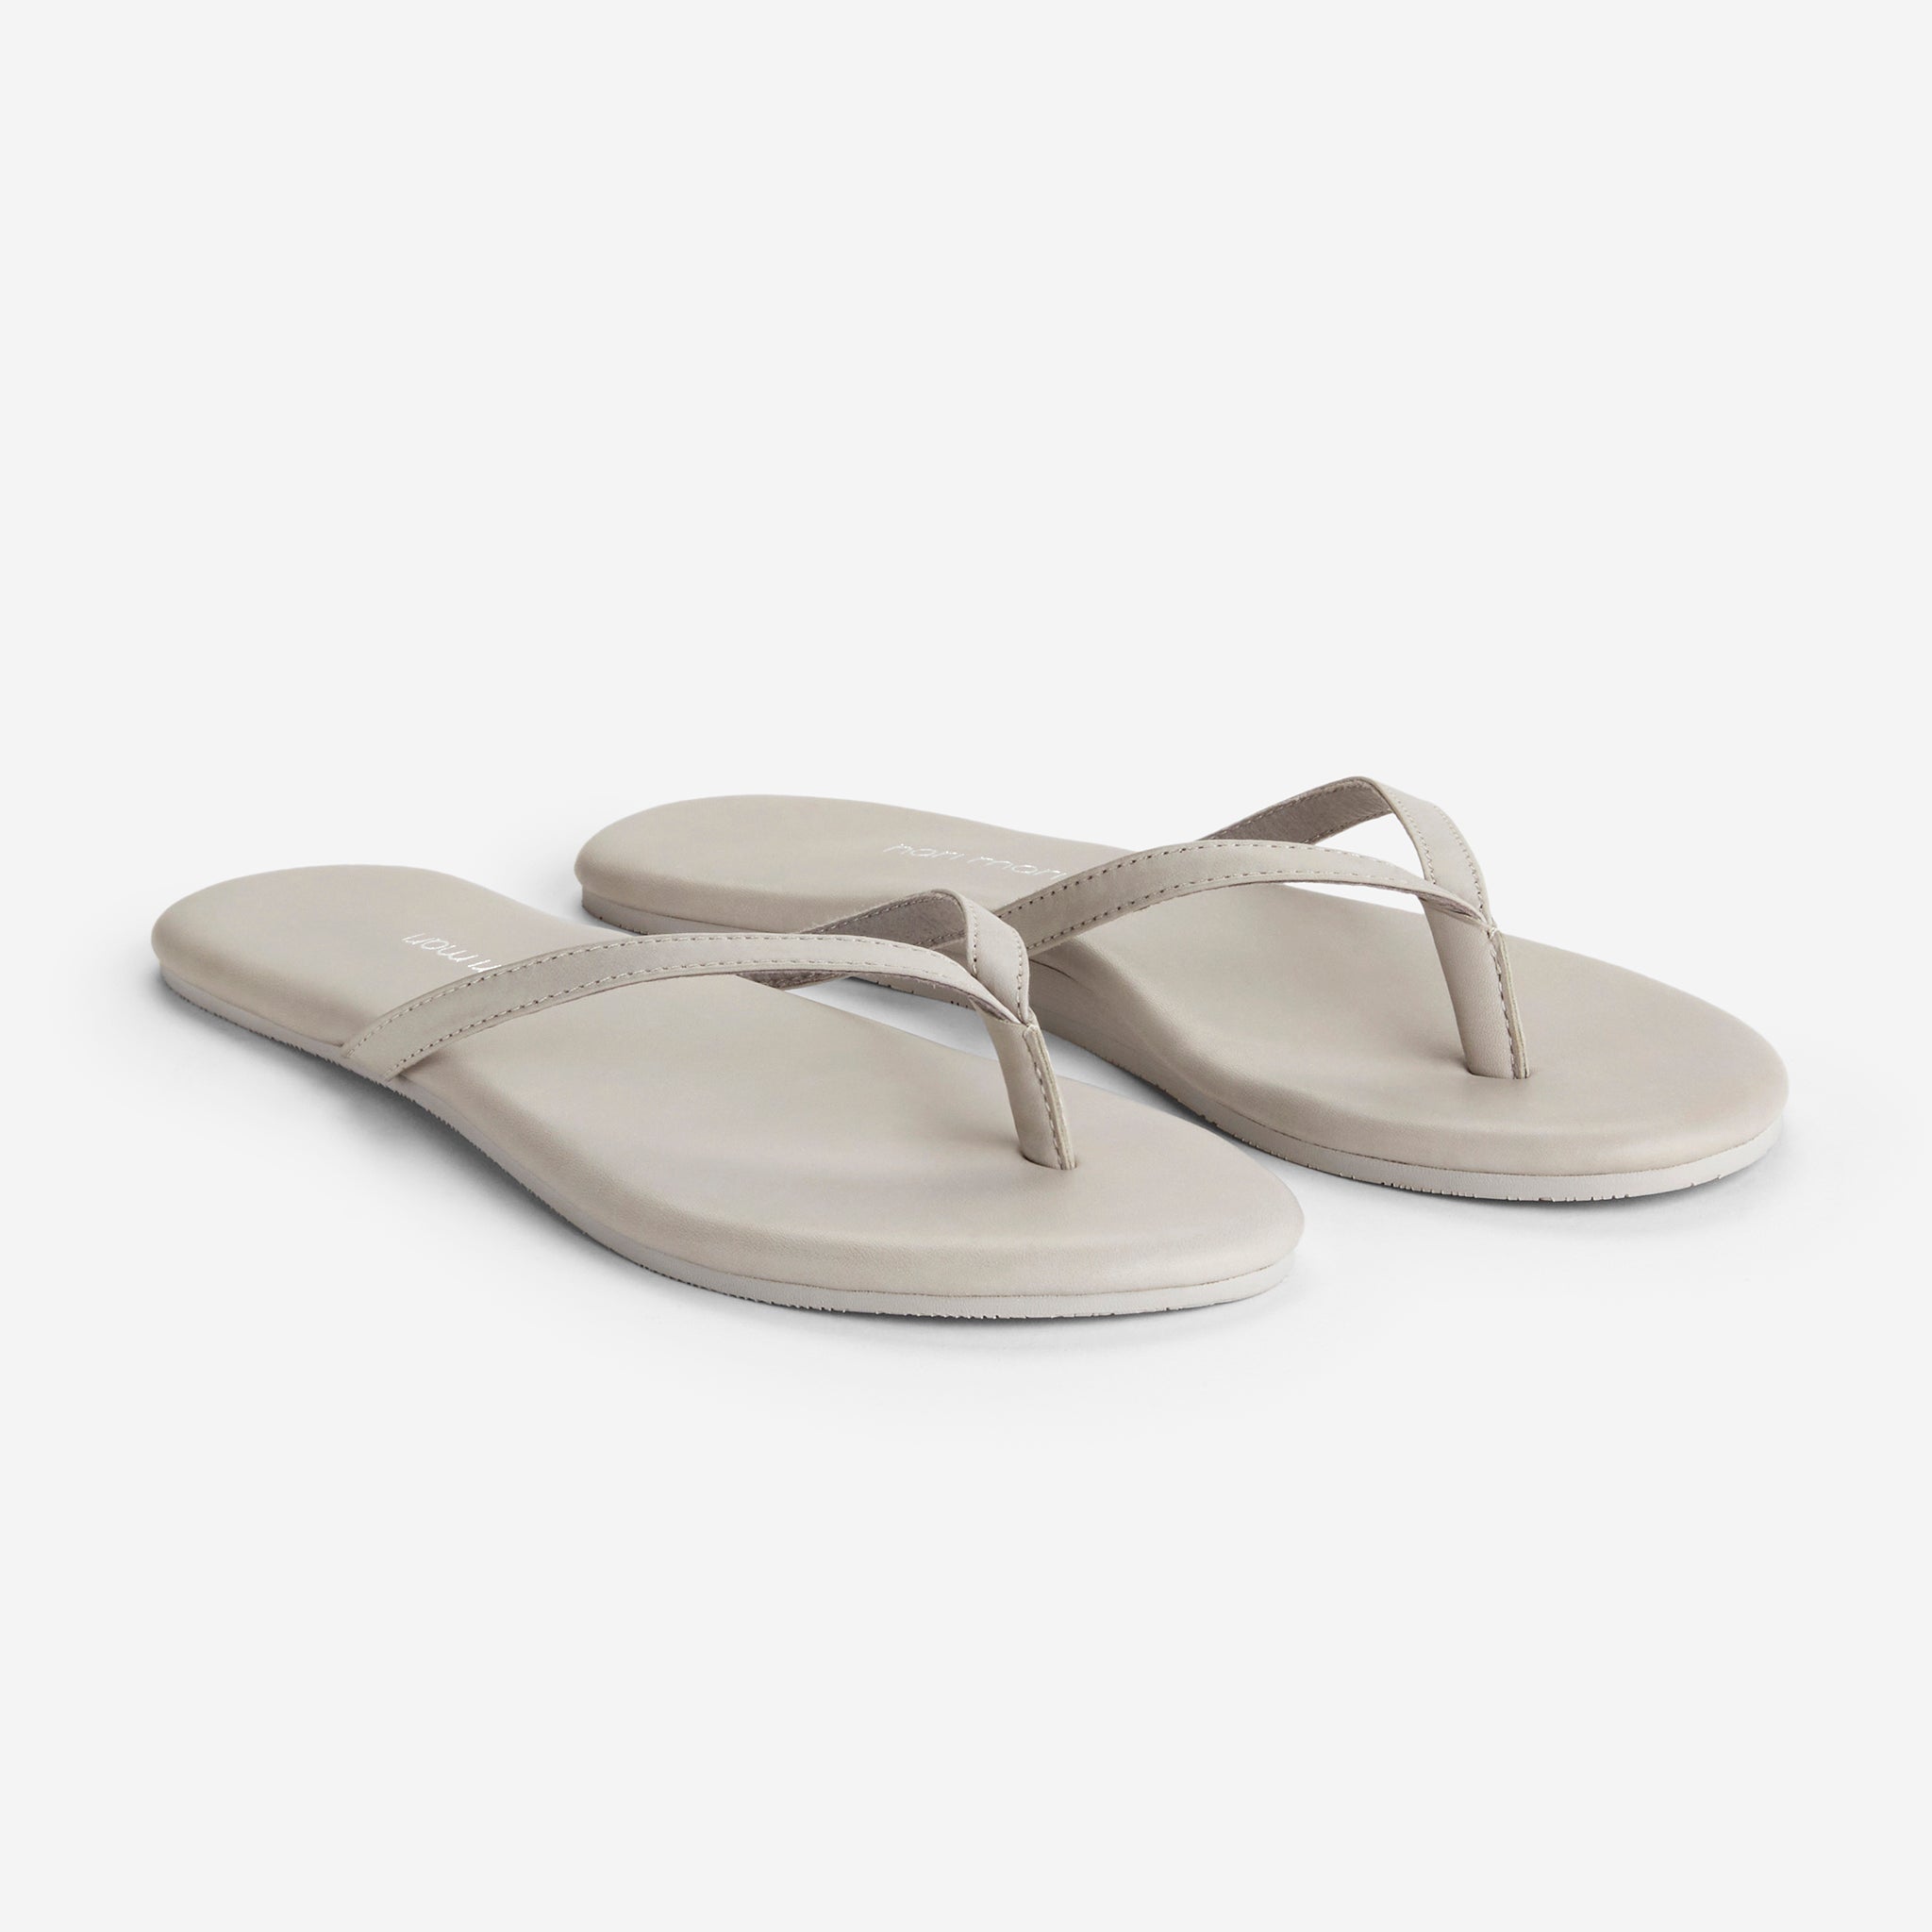 off white leather women's flip flop - Hari Mari sandal